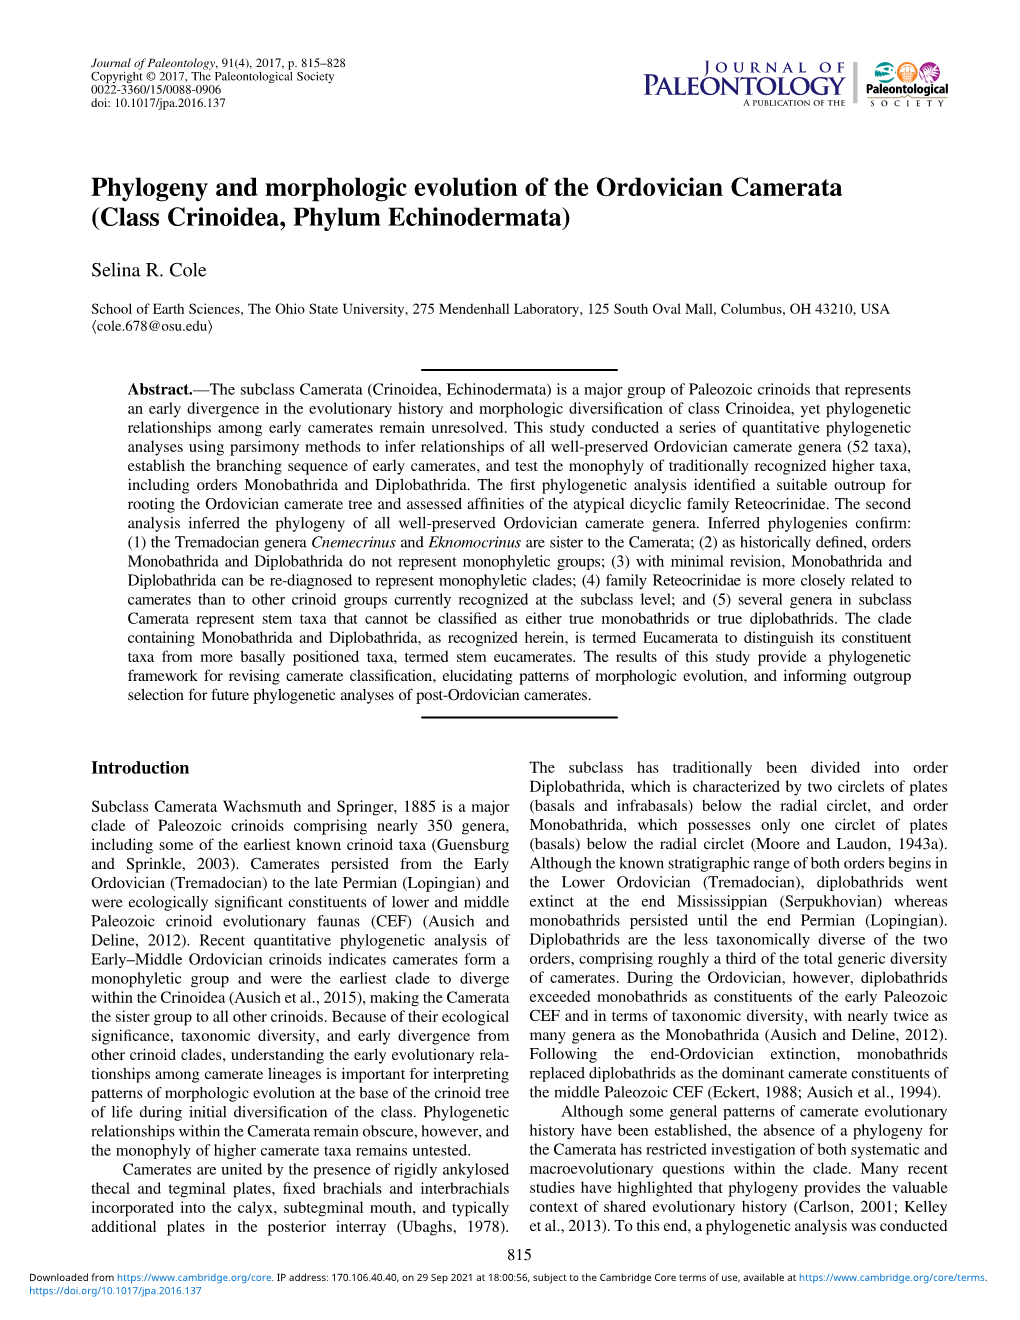 Phylogeny and Morphologic Evolution of the Ordovician Camerata (Class Crinoidea, Phylum Echinodermata)